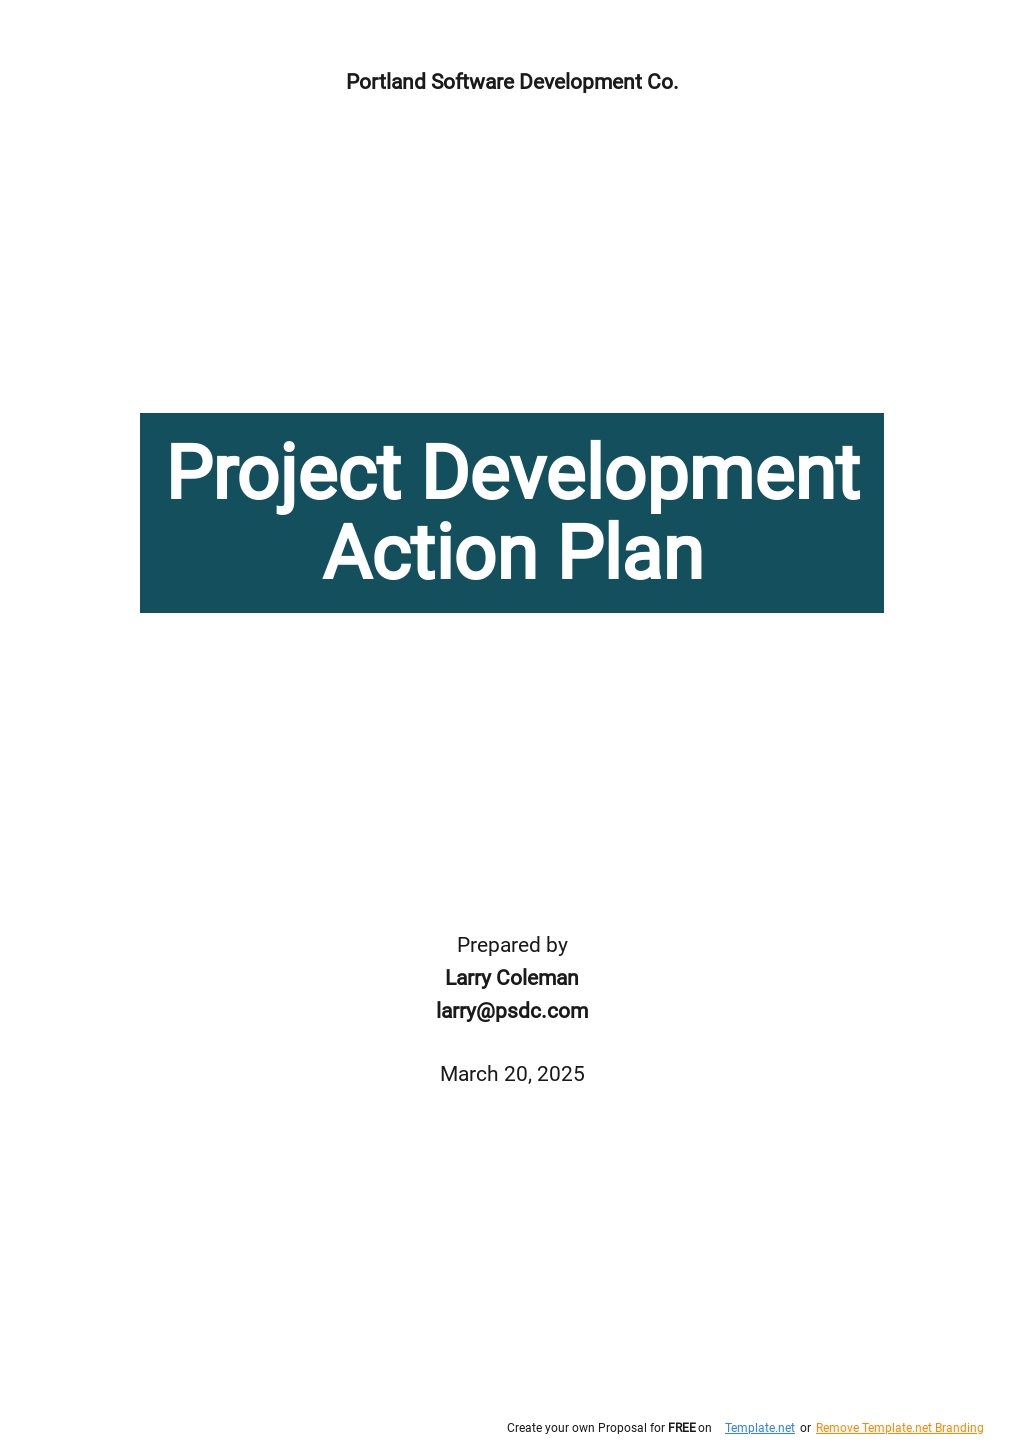 Project Development Action Plan Template.jpe